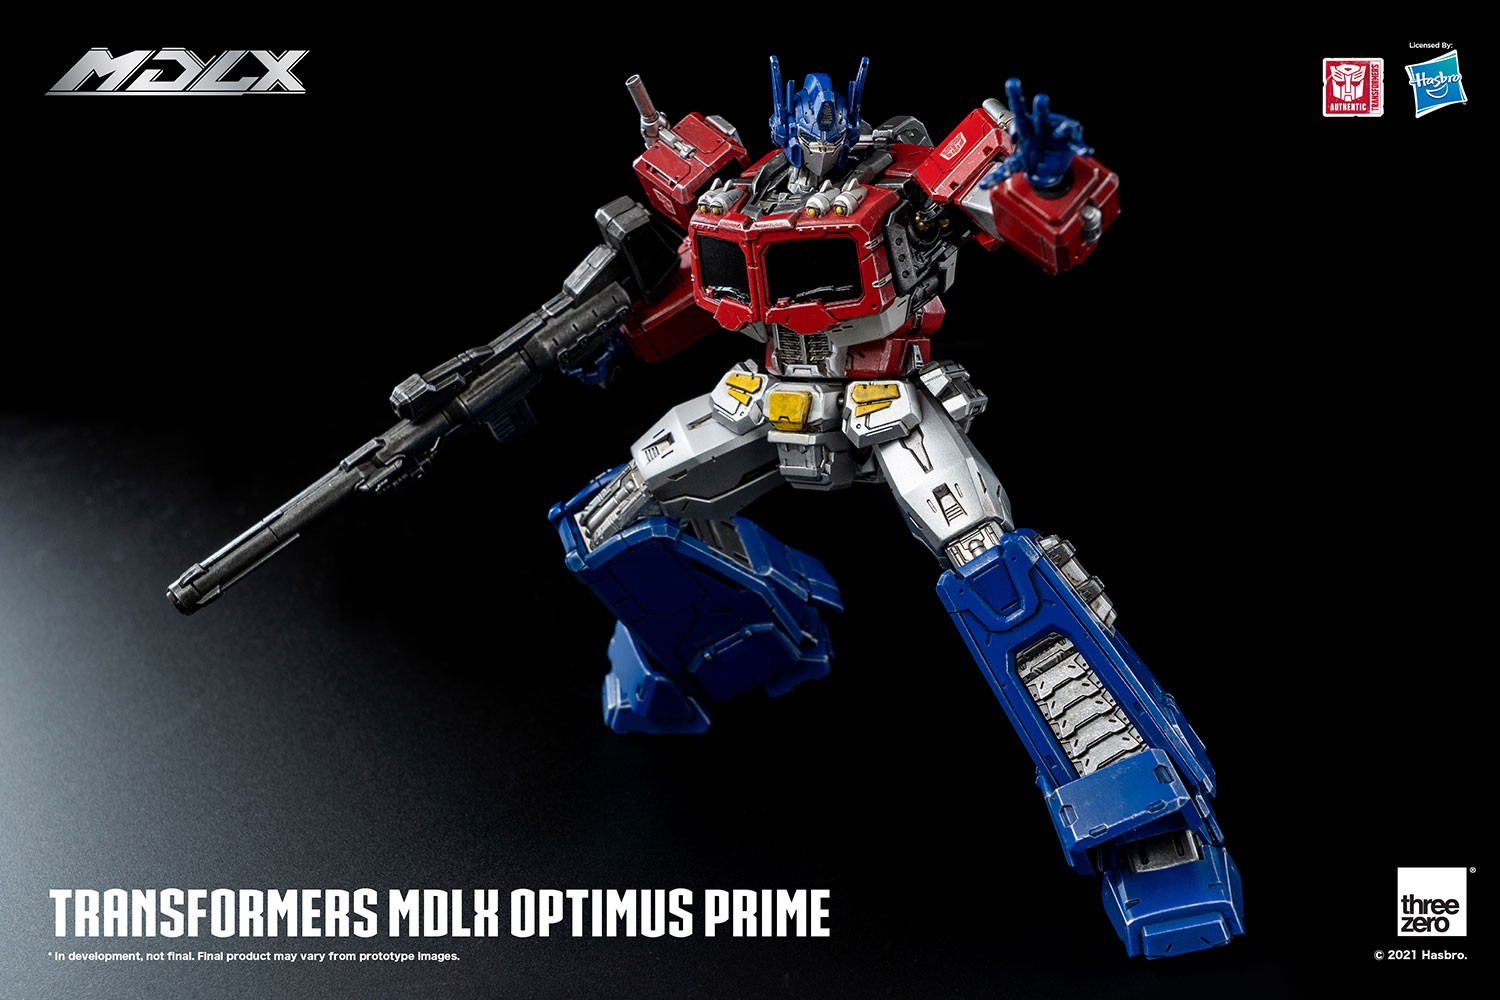 Optimus Prime- Prototype Shown